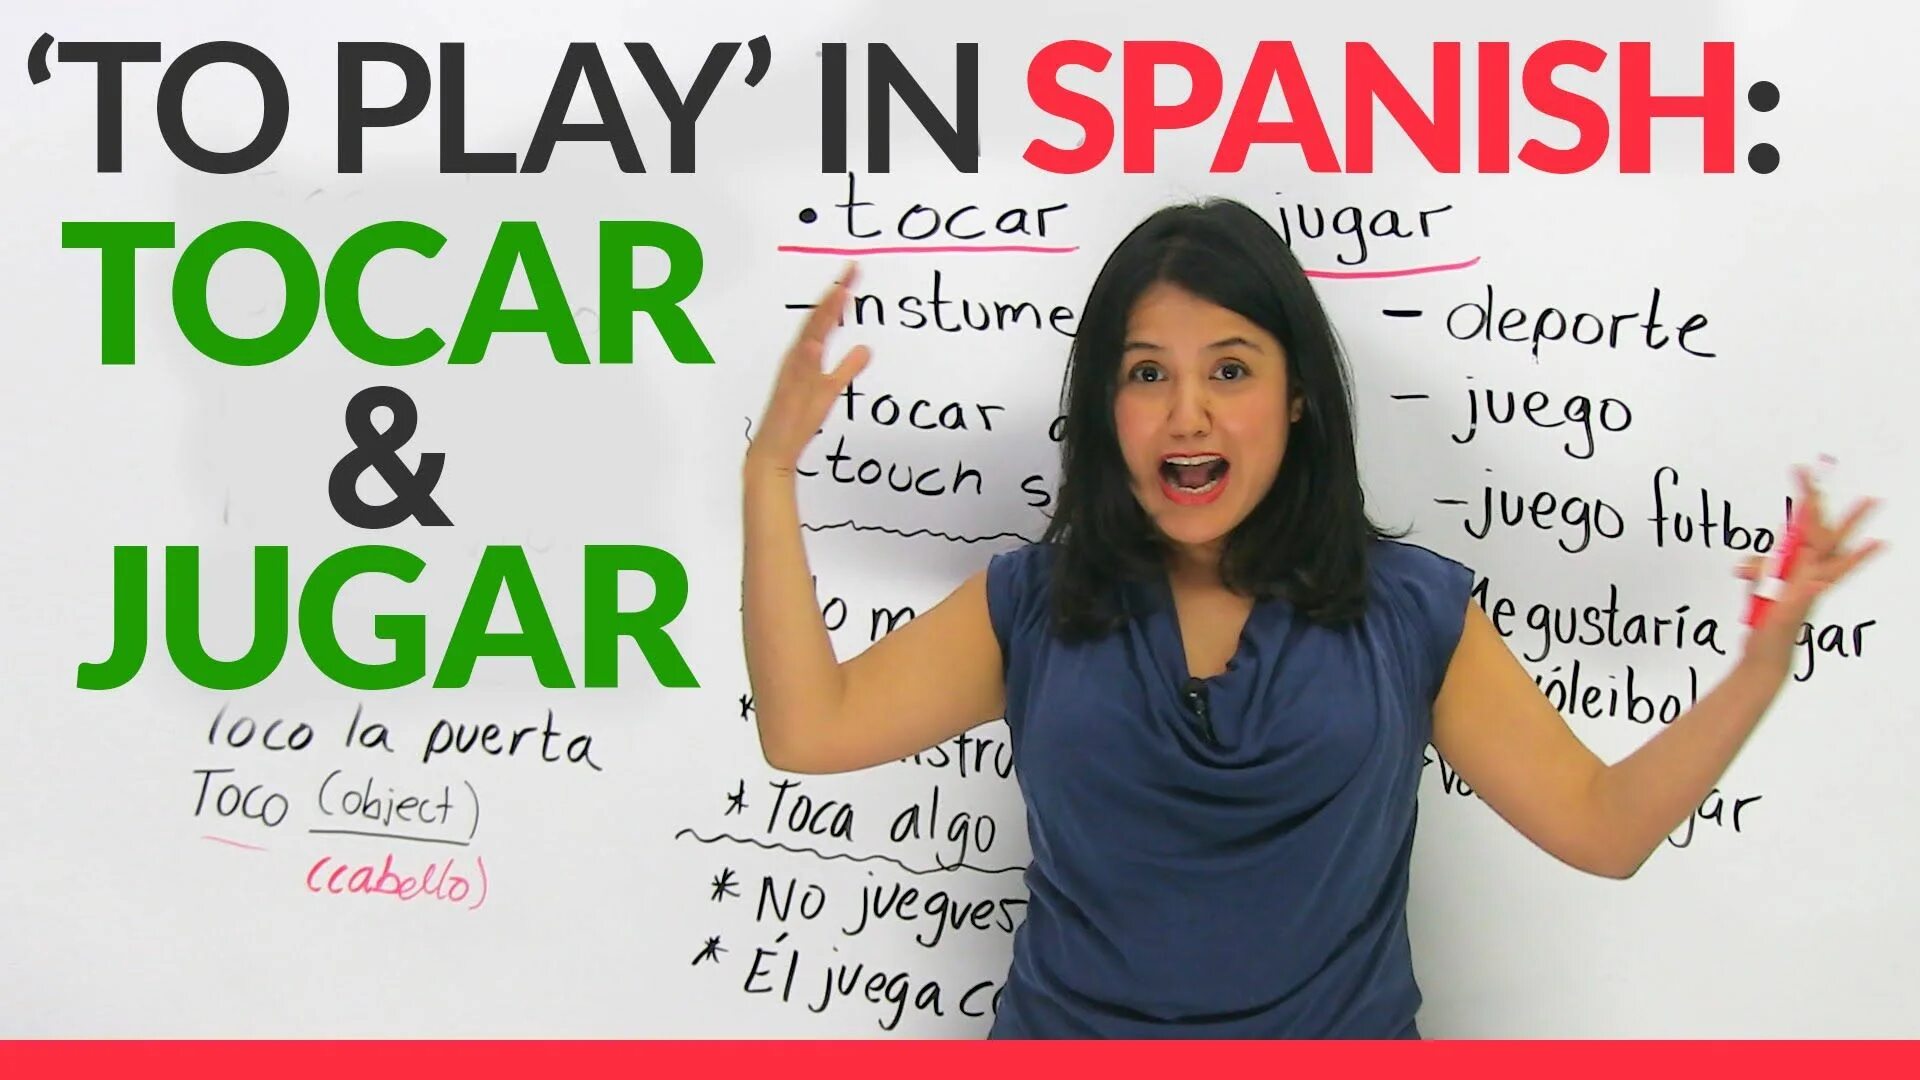 I can spanish. Tocar испанский. Verb estas in Spanish. Phrasal verbs in titles. Phrasal verbs in movie.